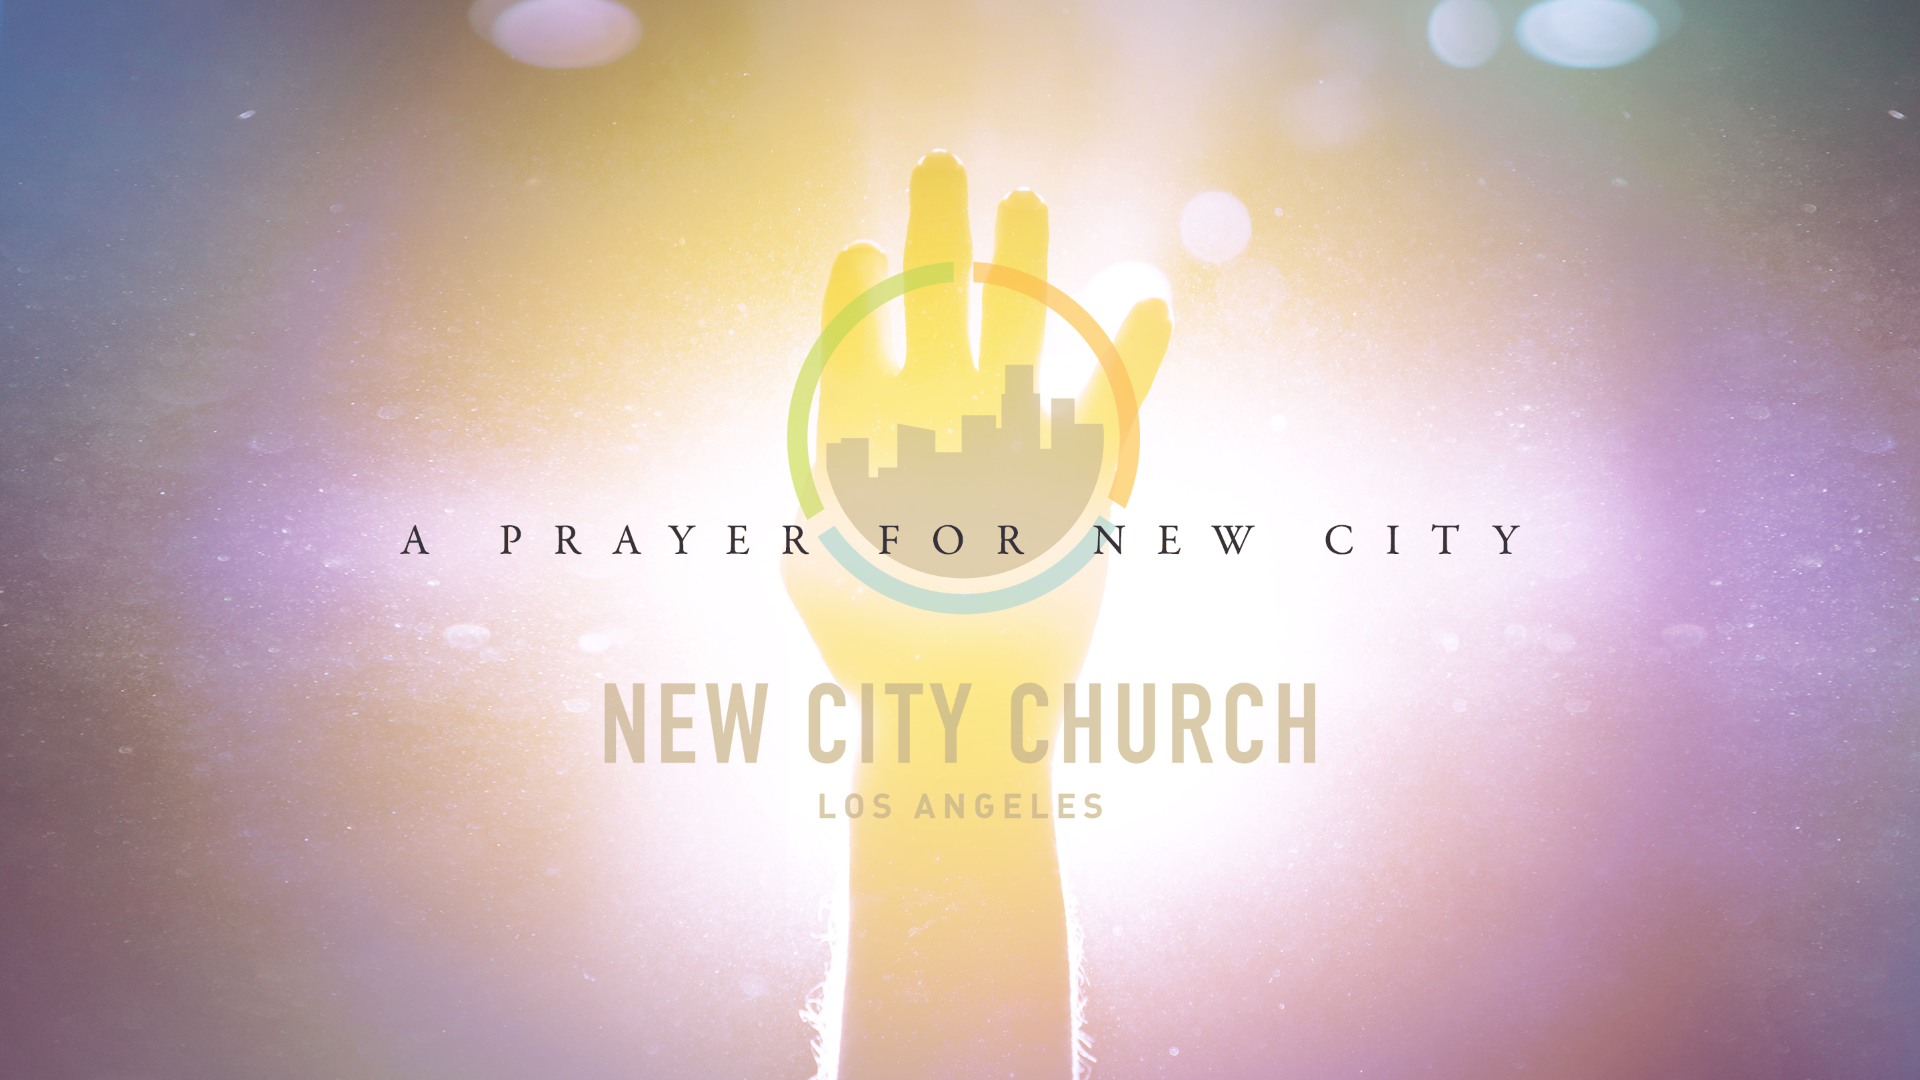 A Prayer for New City Church